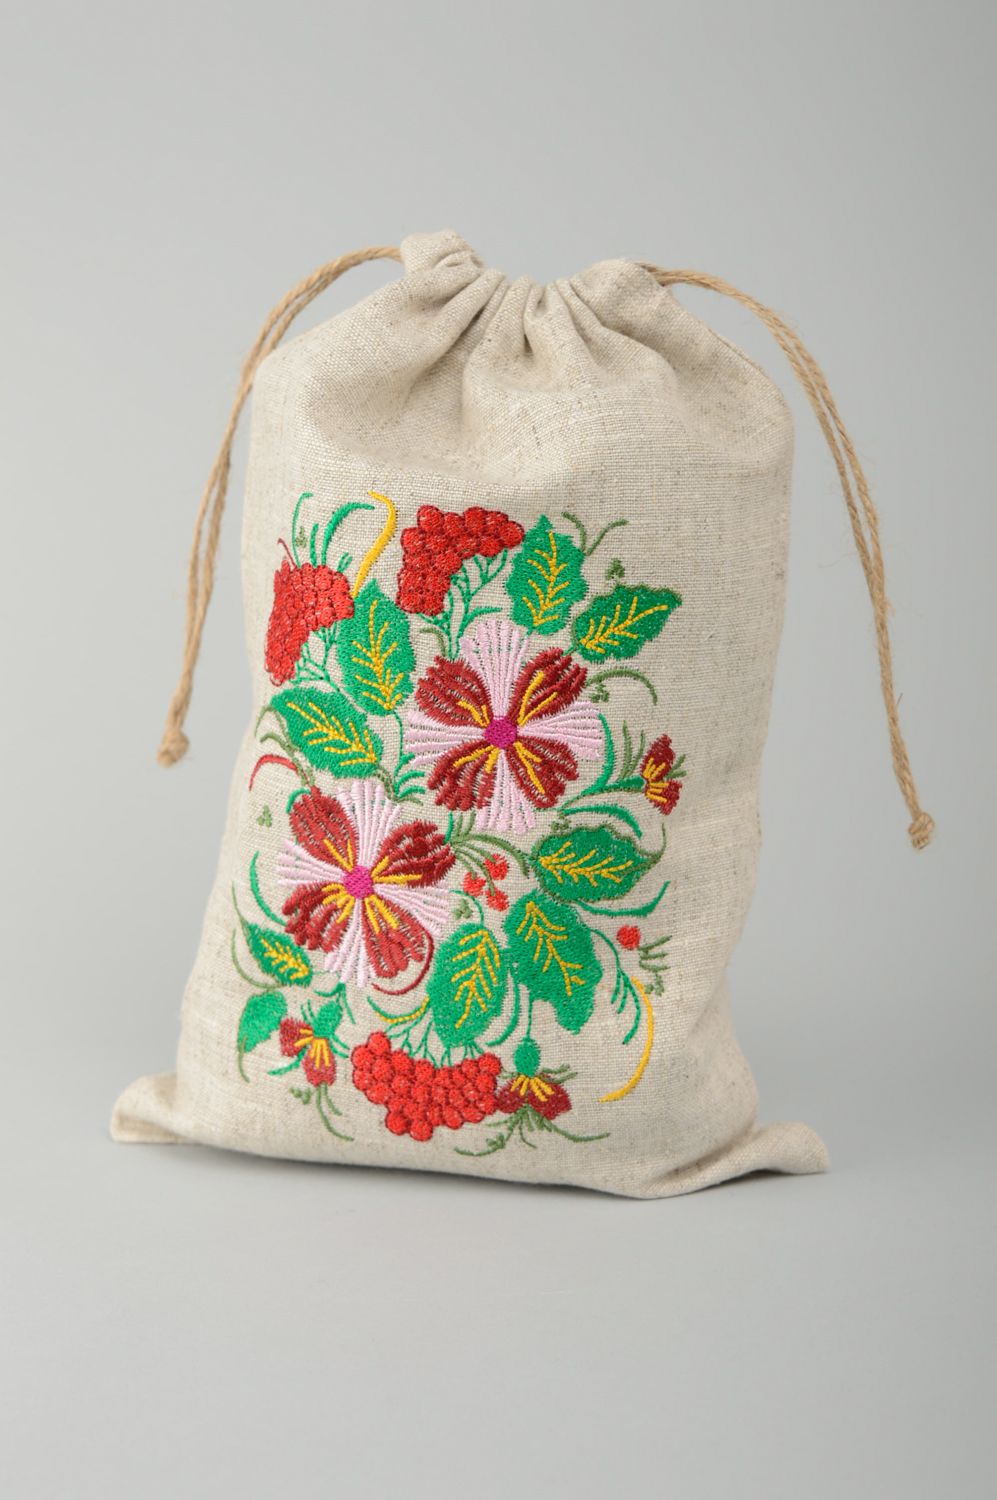 Handmade embroidered fabric gift bag photo 1